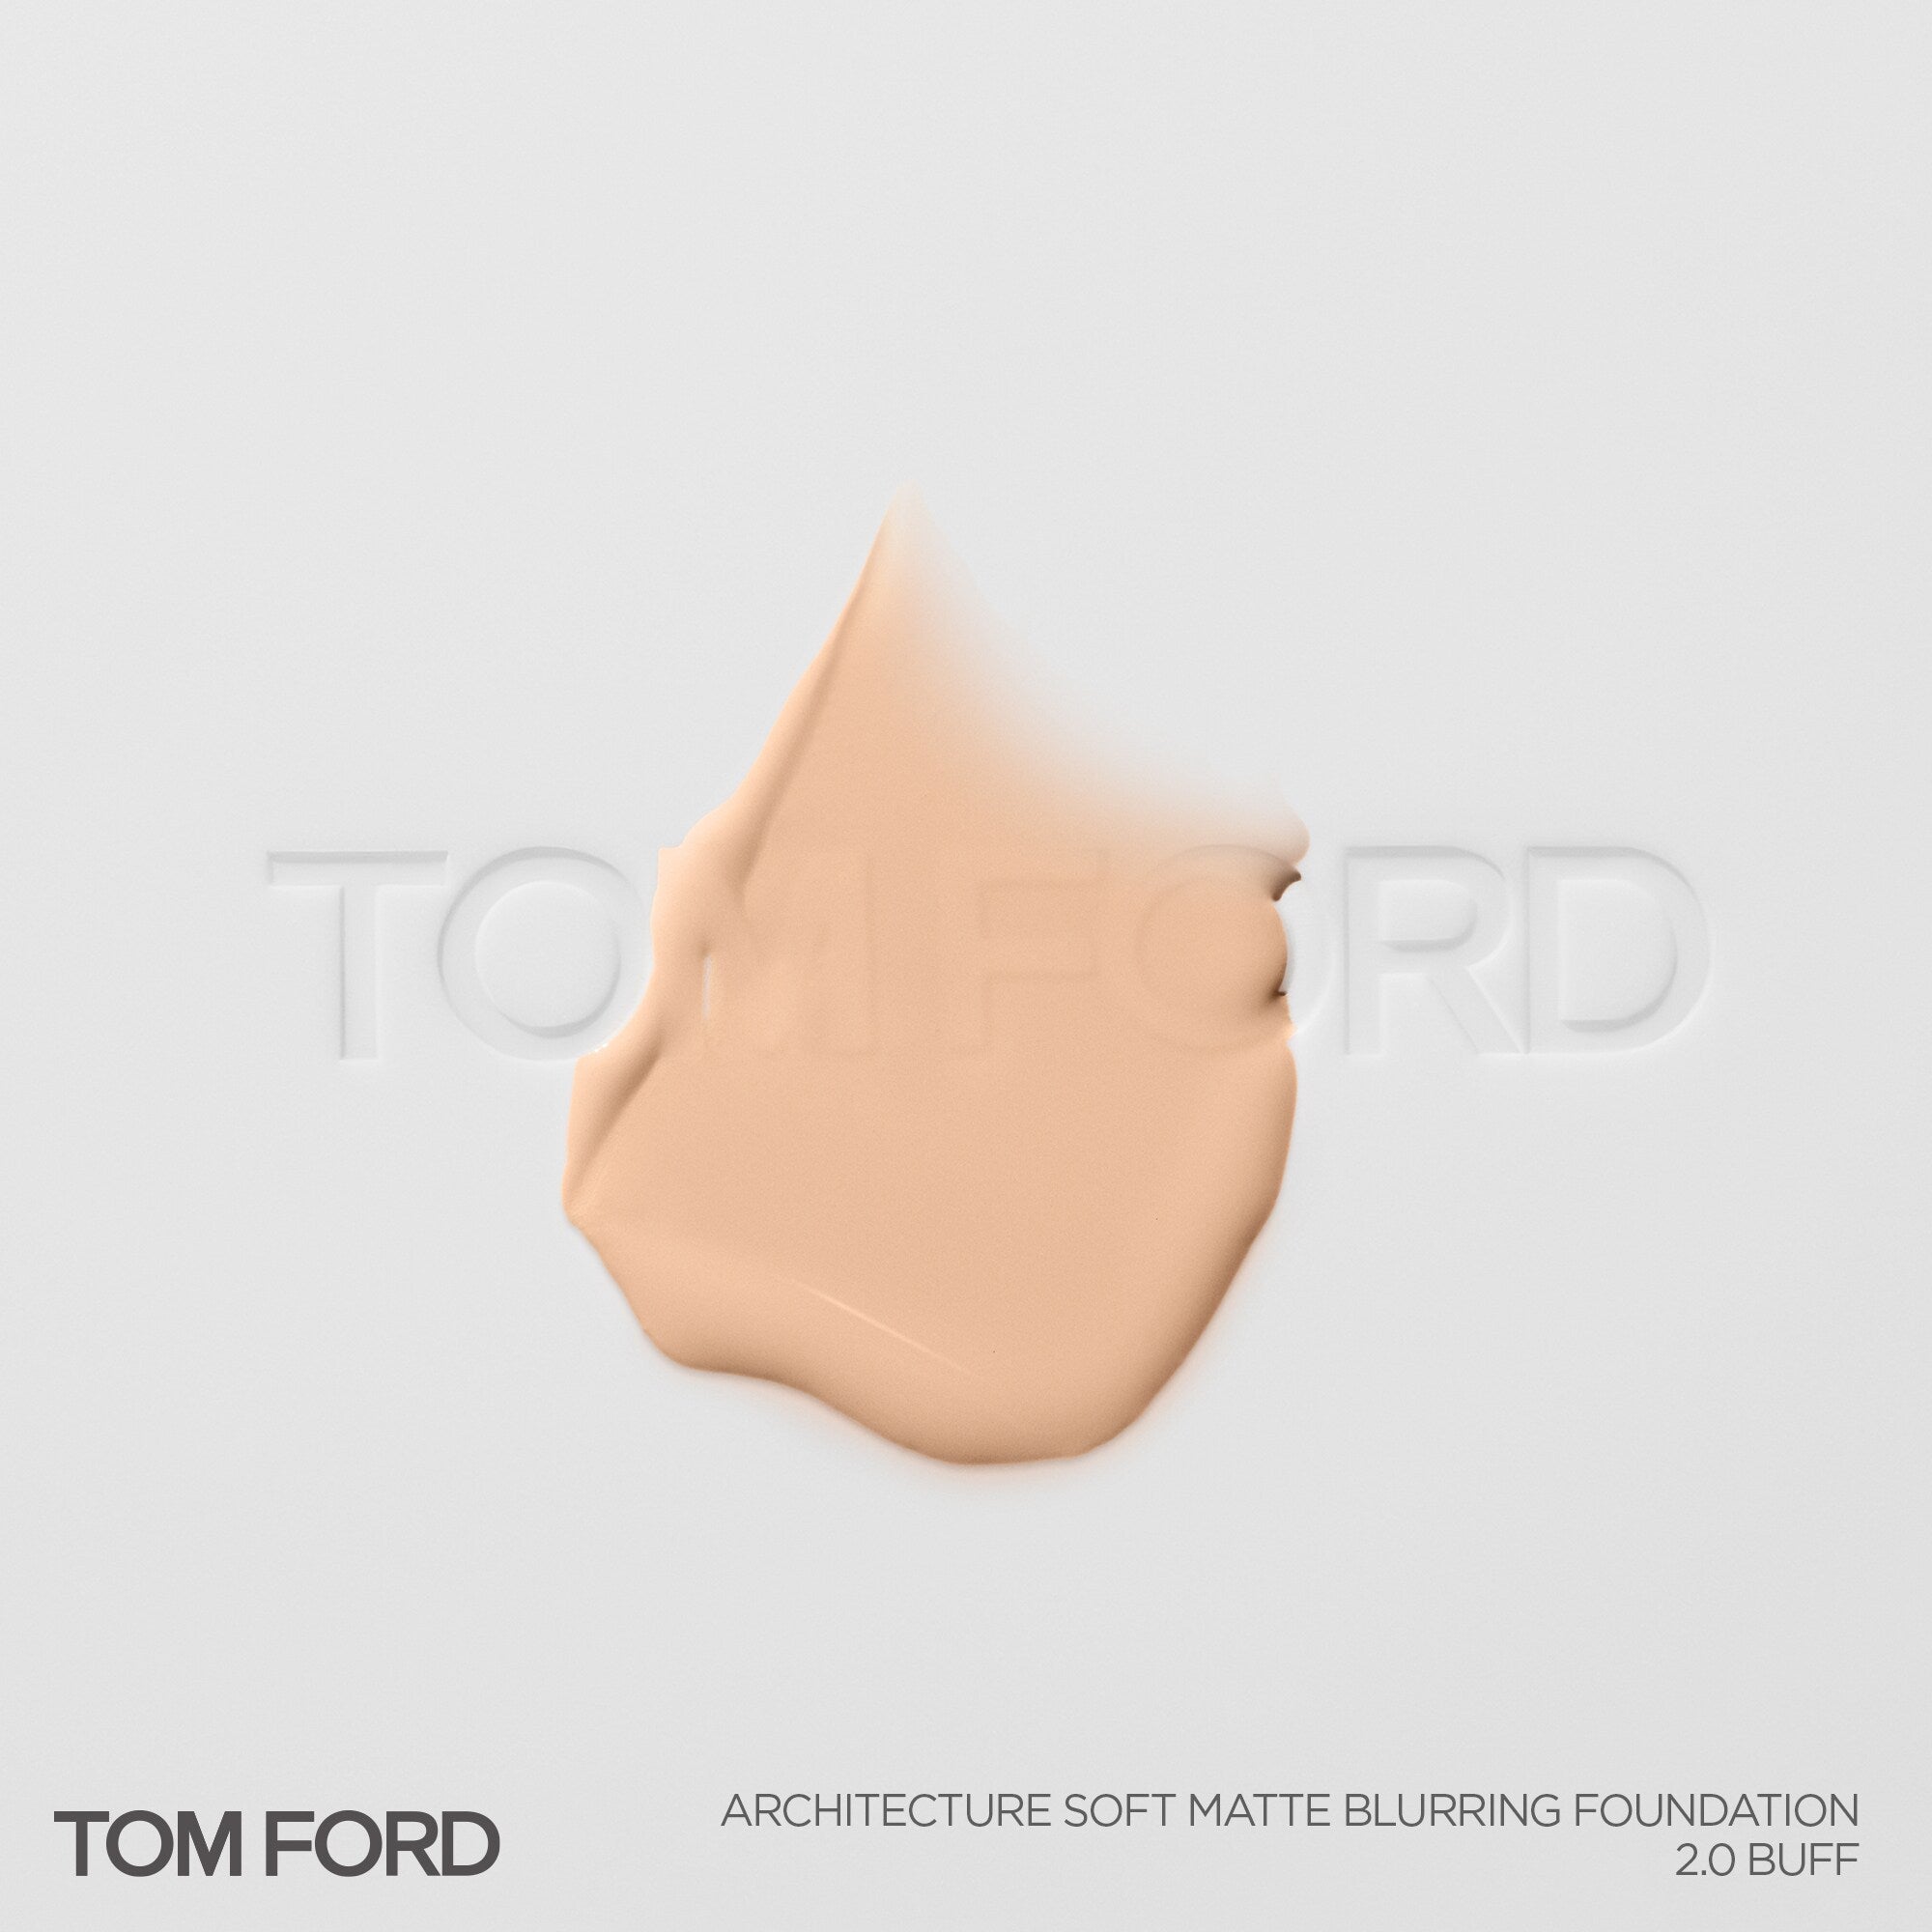 Kem Nền TOM FORD Architecture Soft Matte Foundation #2.0 Buff